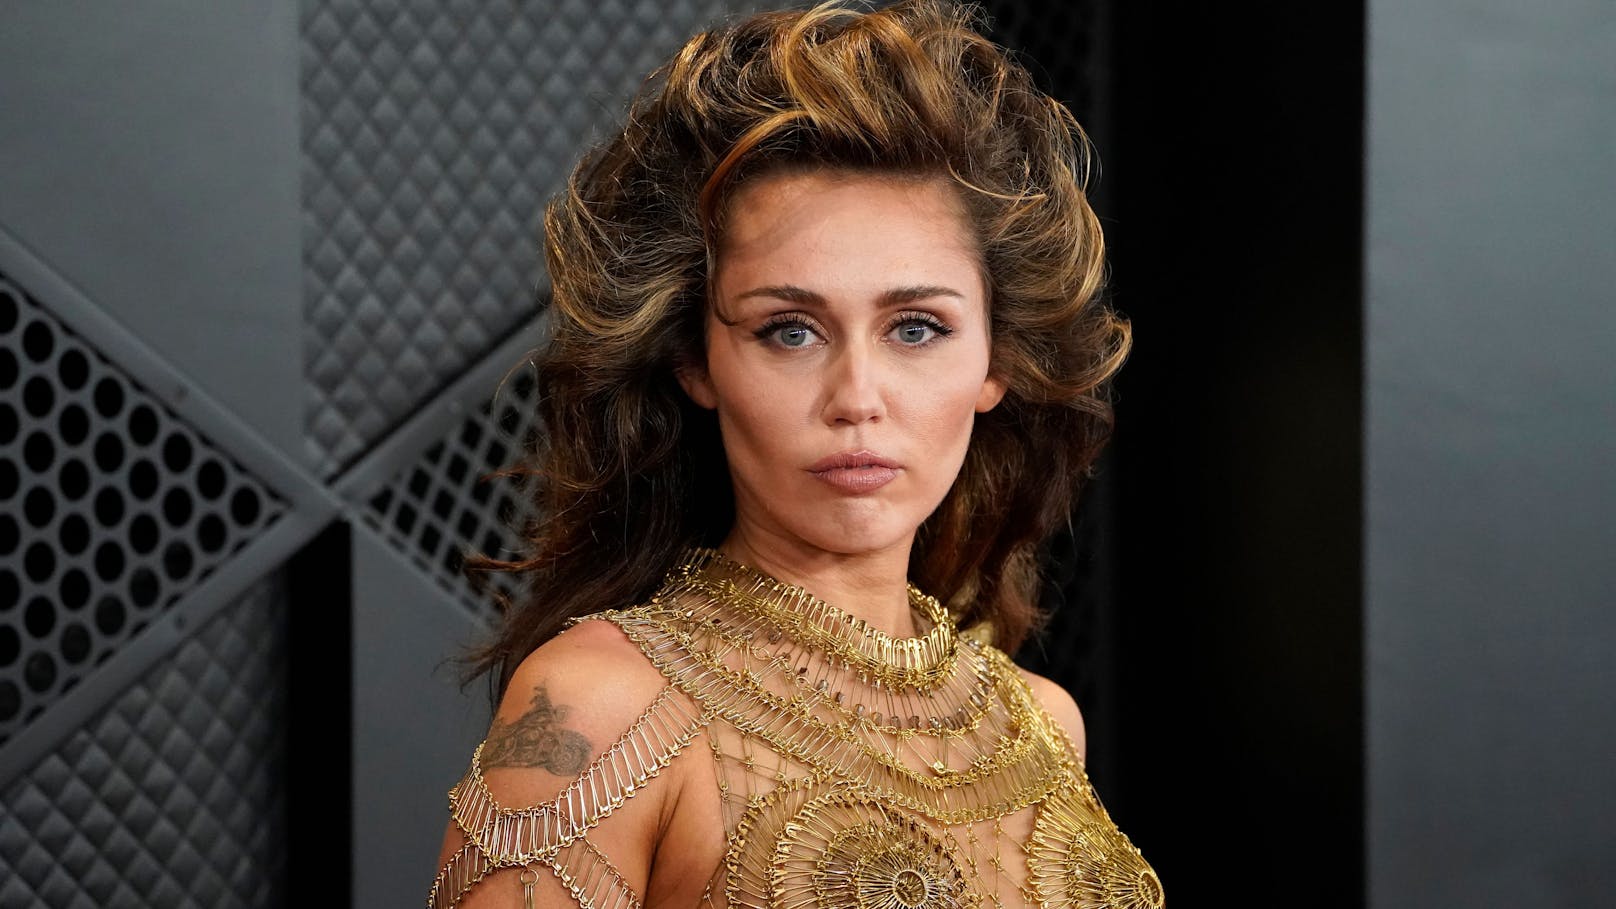 Nackedei Miley Cyrus – so reagierte ihr Bodyguard